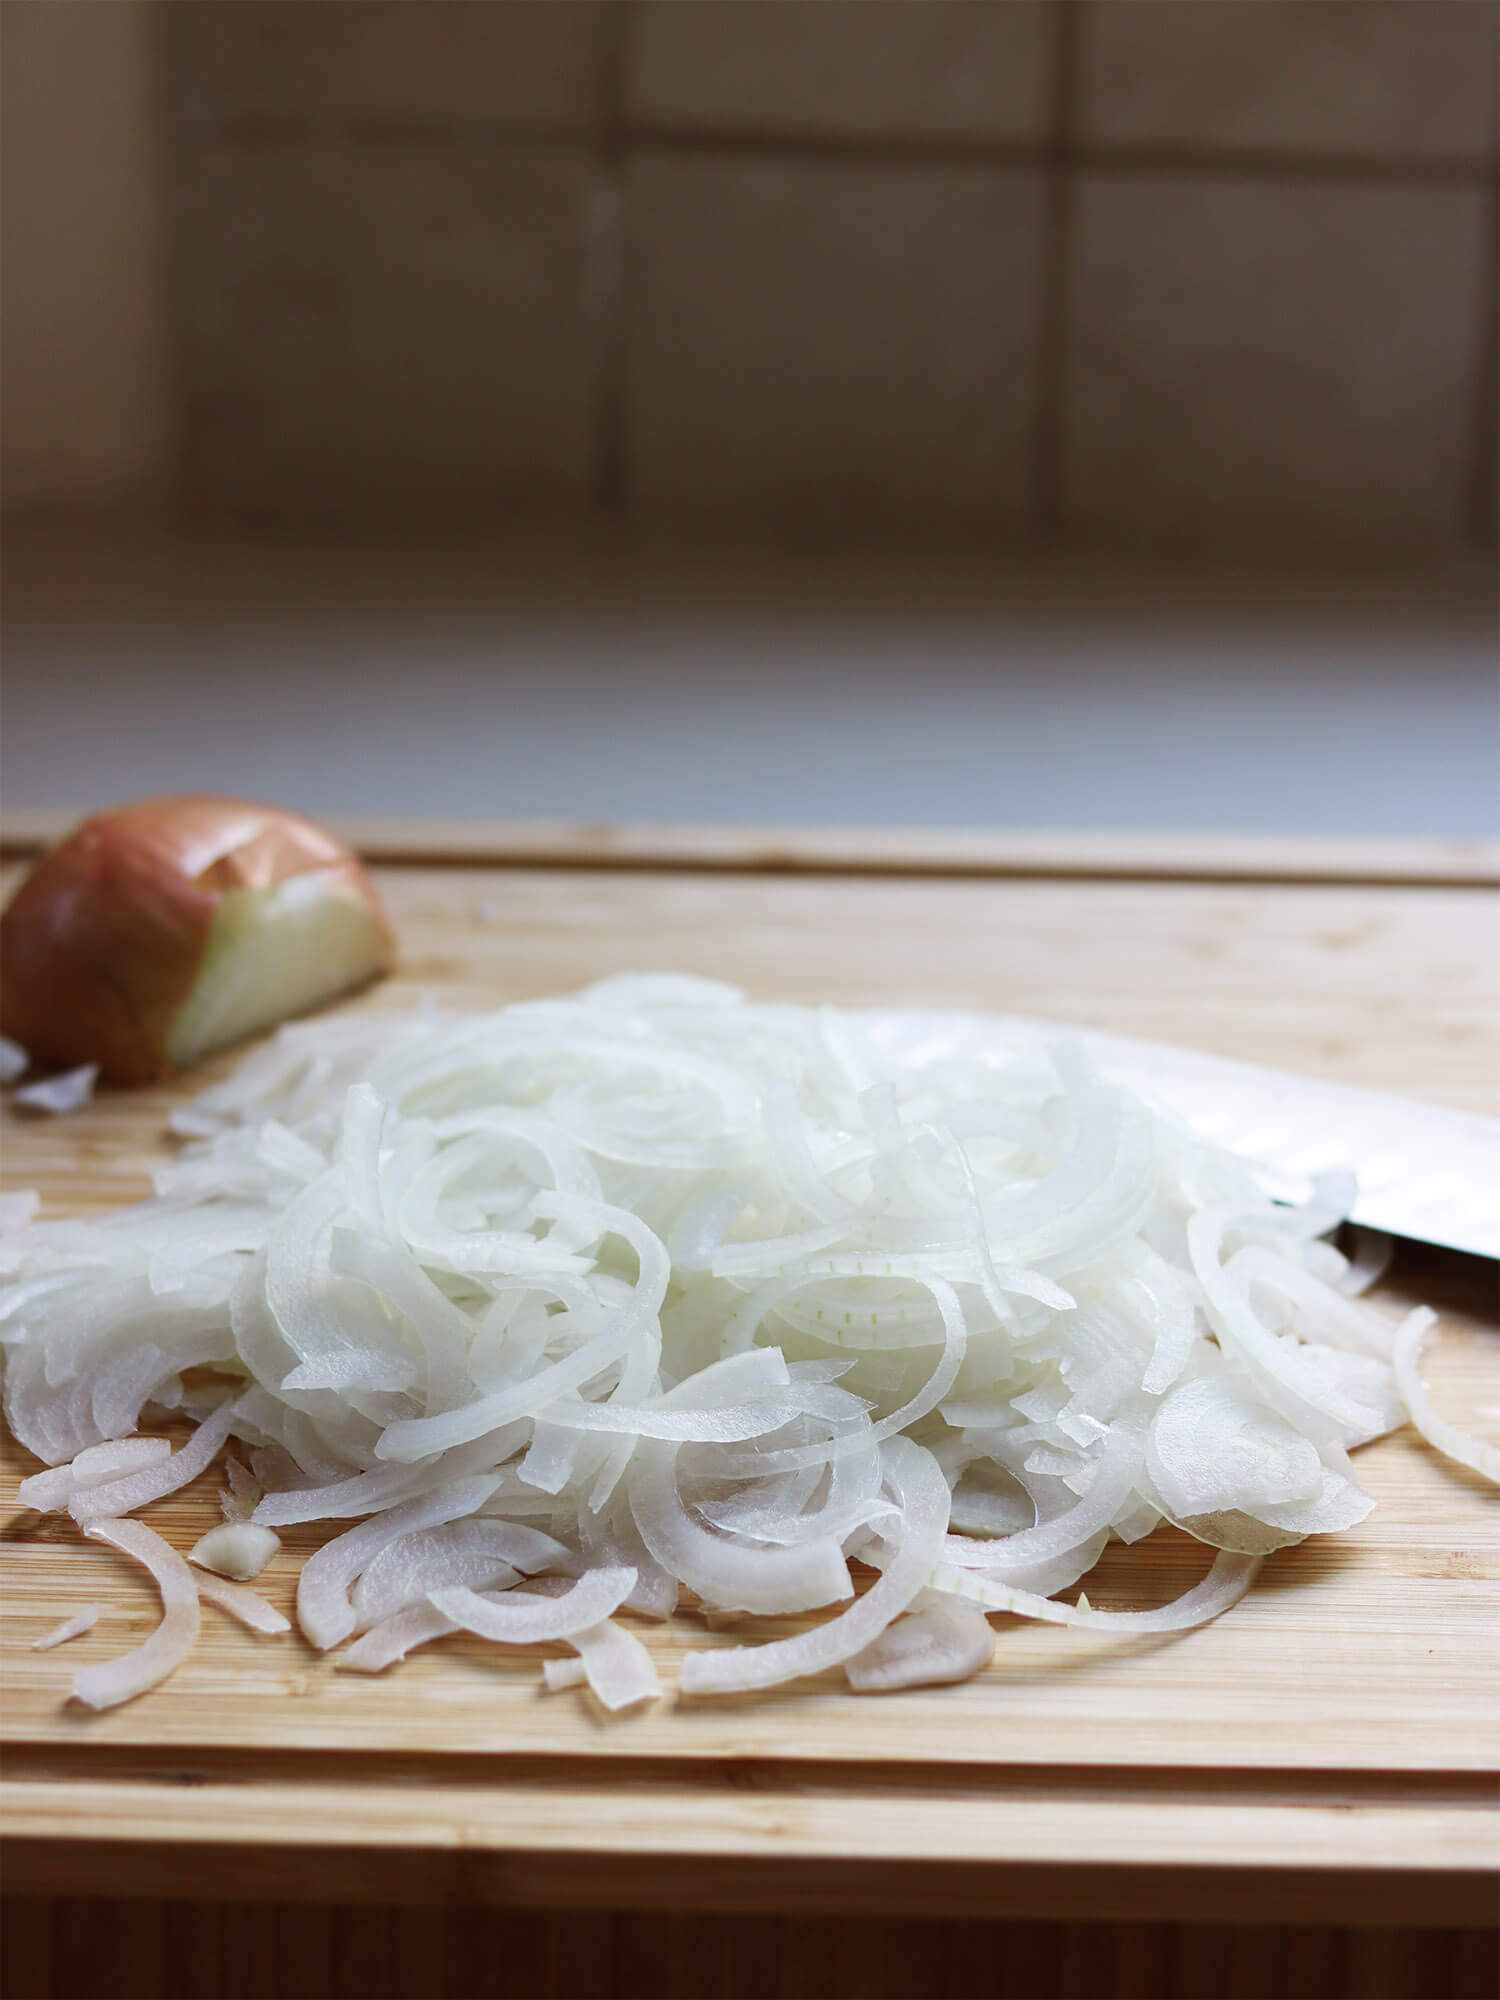 Korean onion salad, recipe from Sonamu Dubai